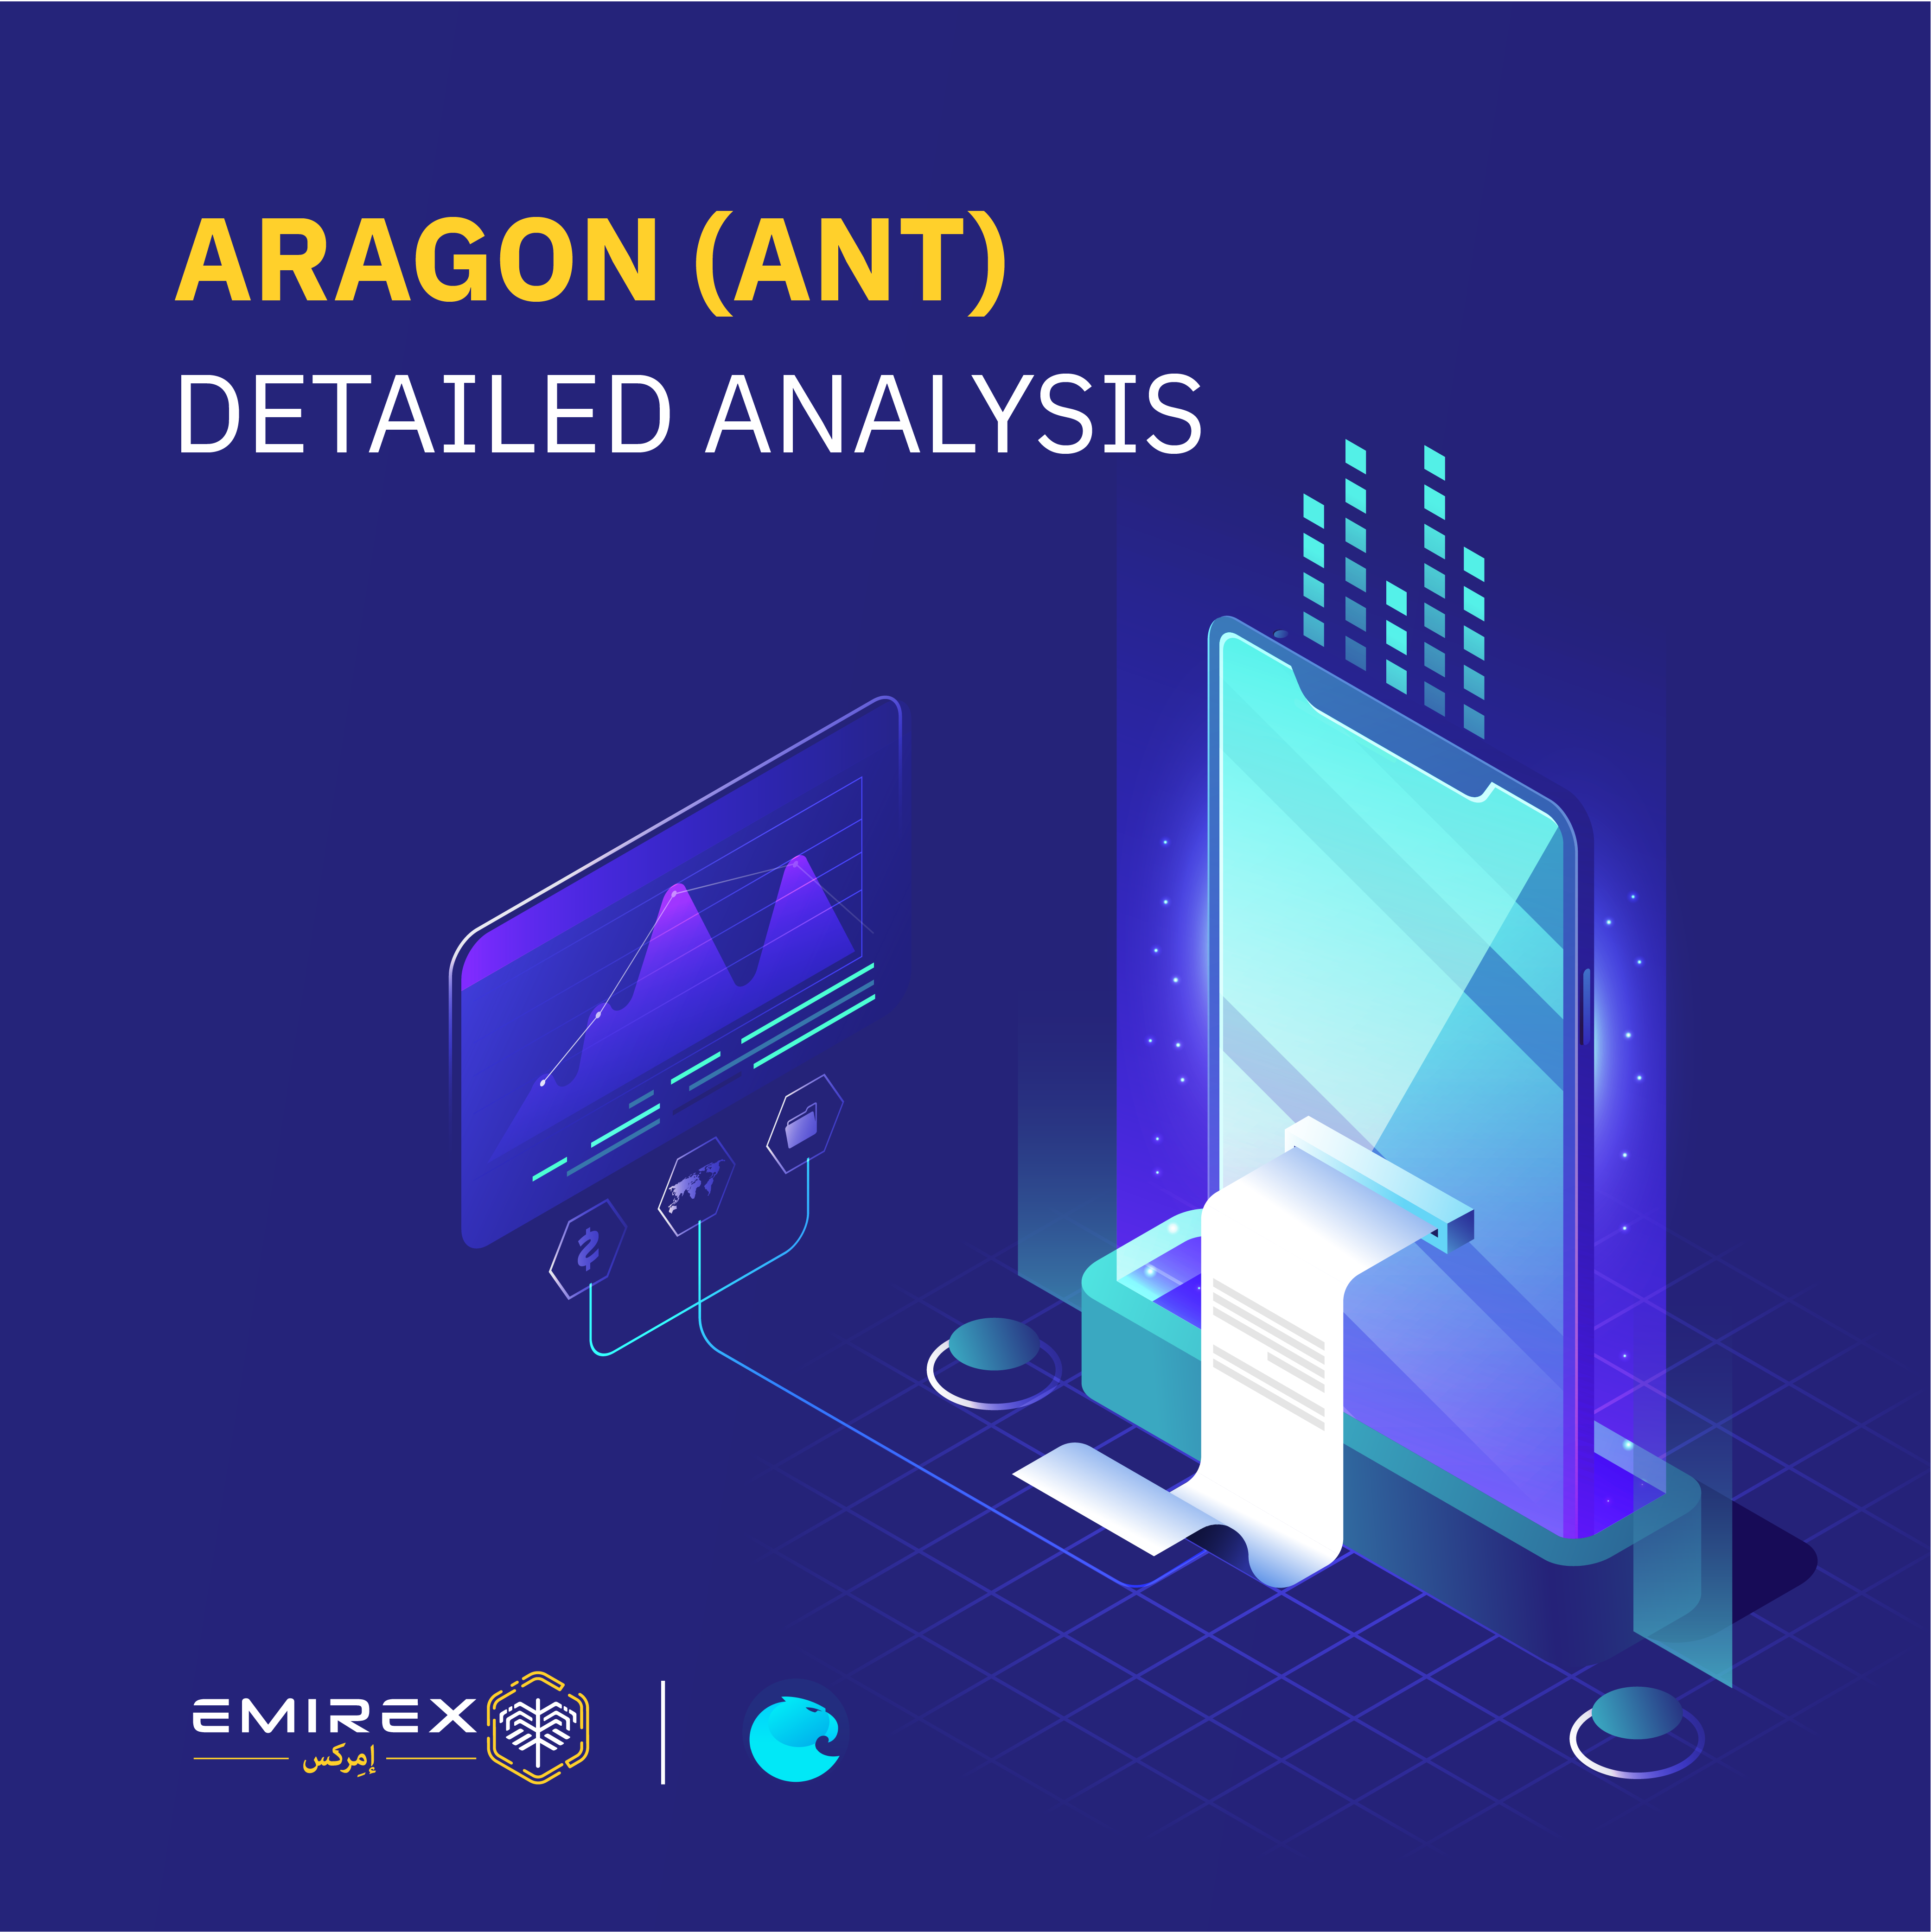 Detailed Analysis of Aragon (ANT)